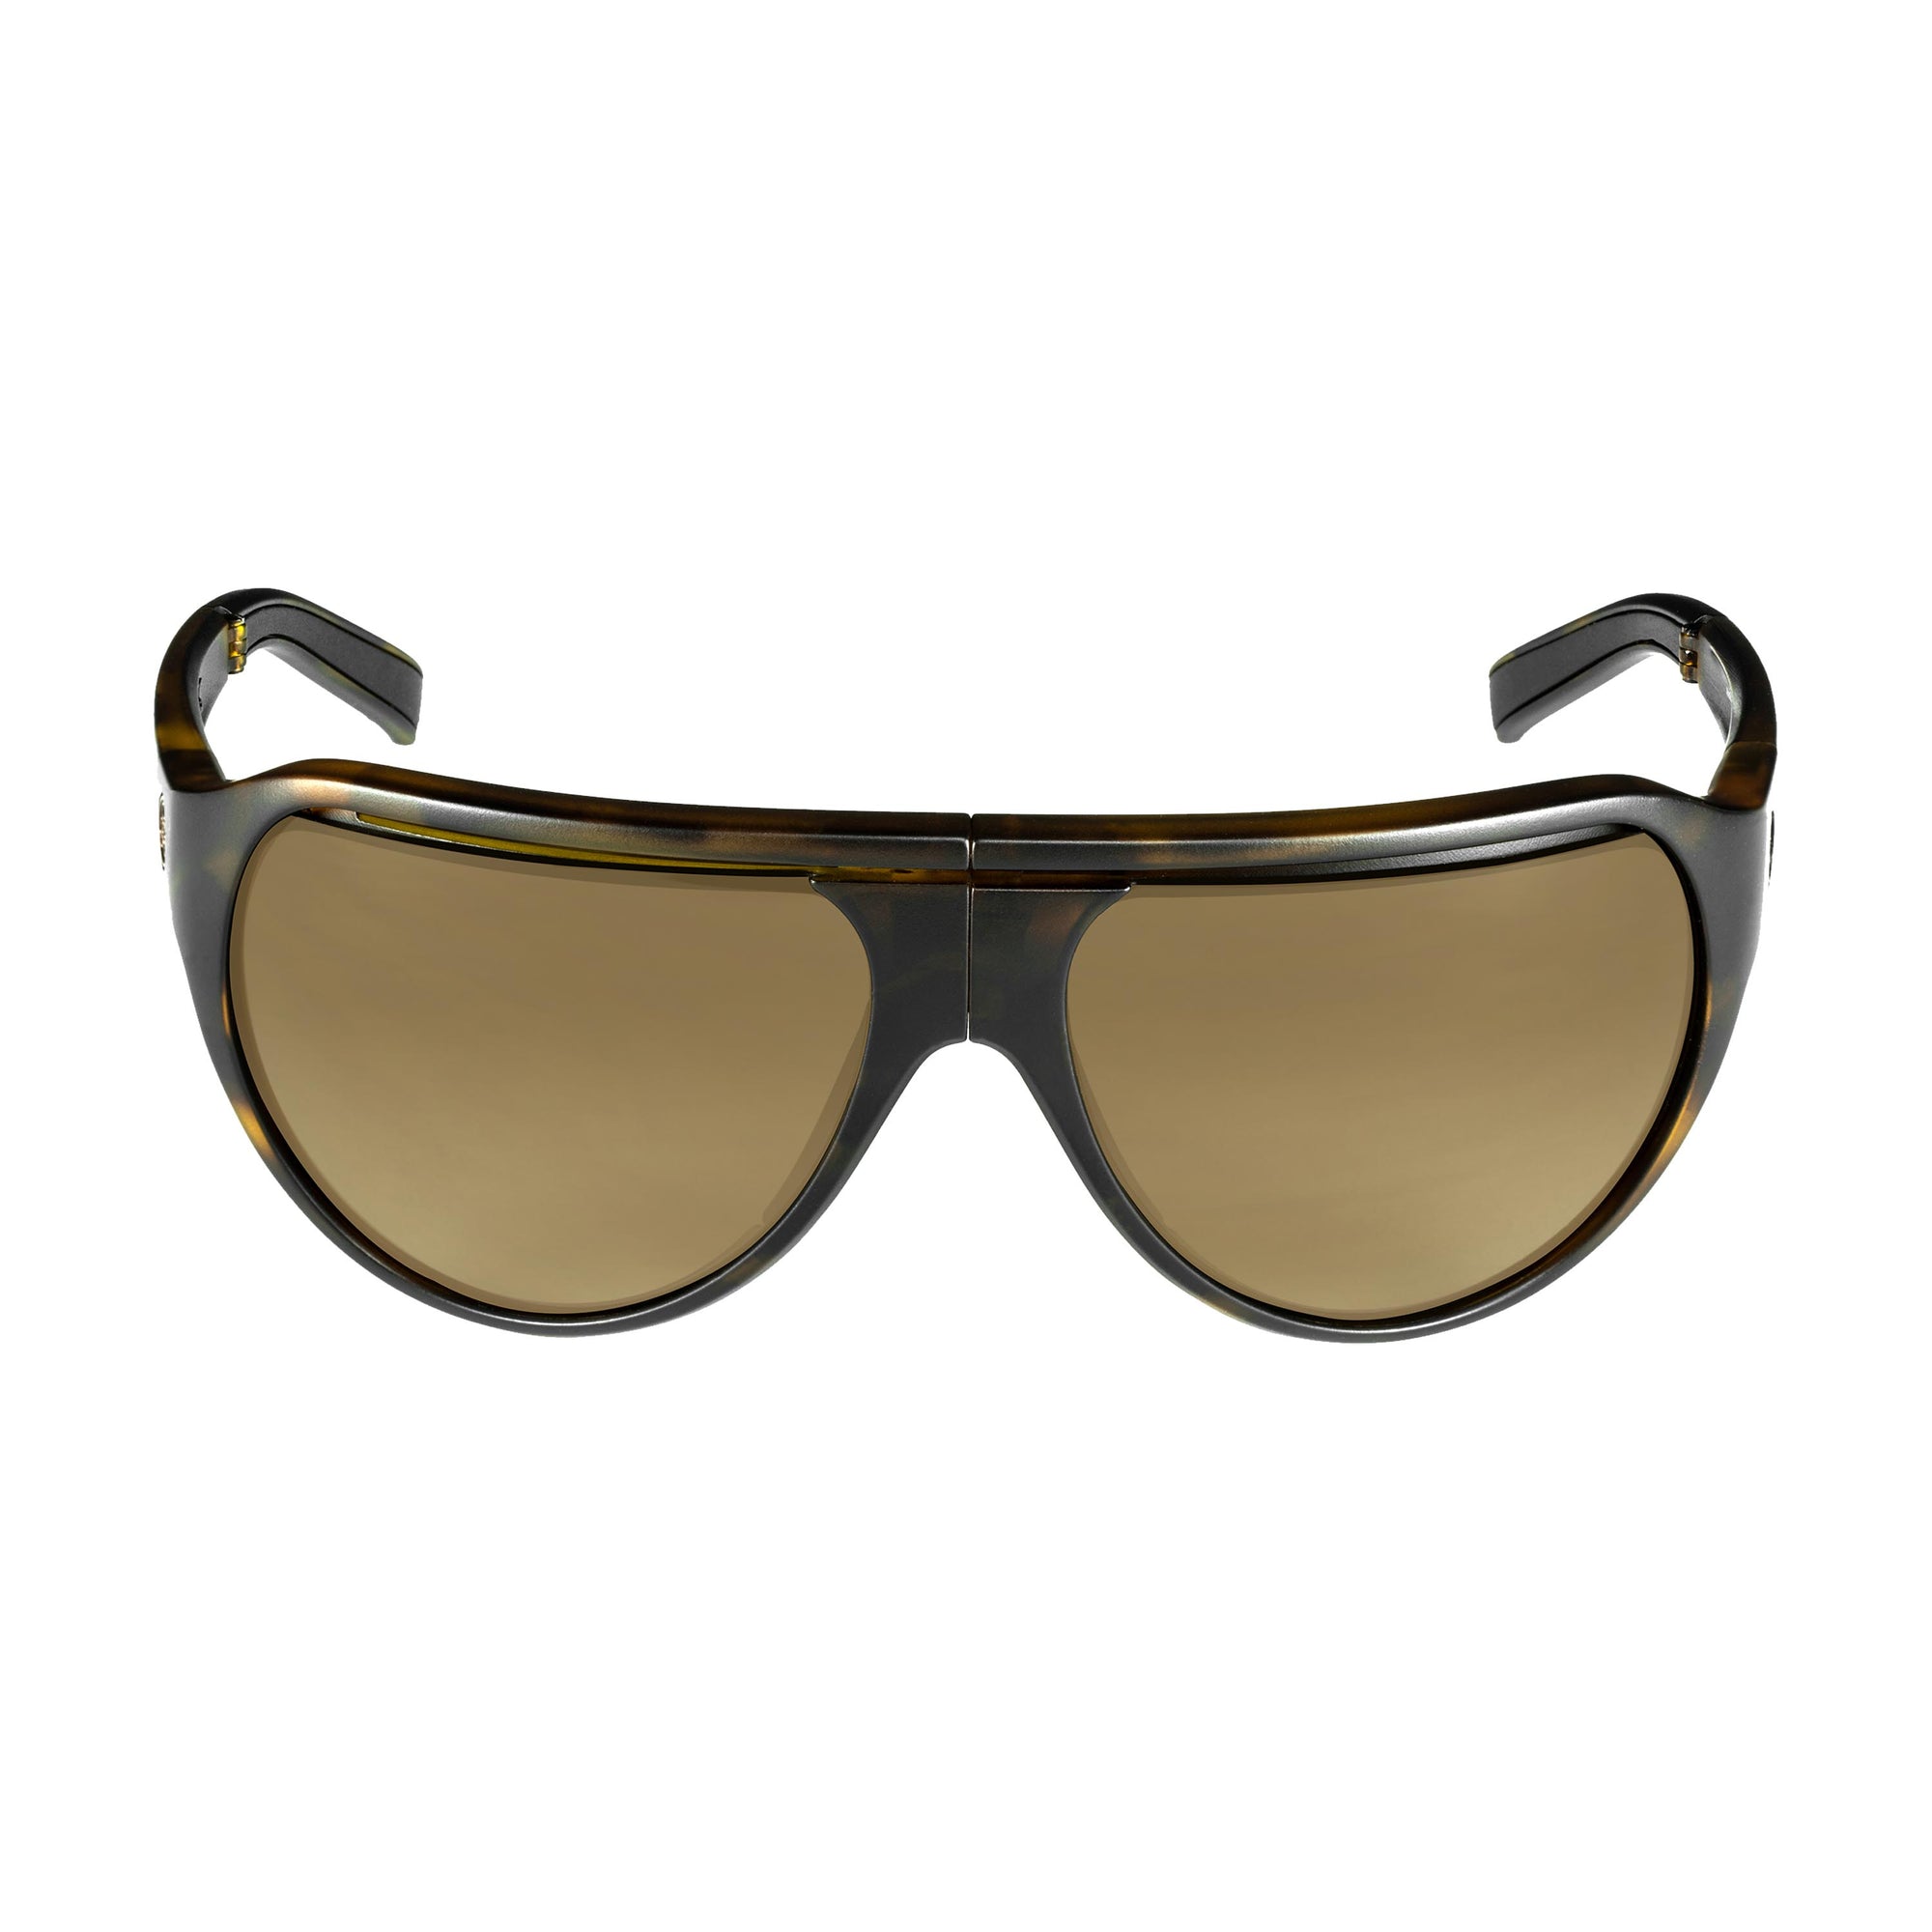 Popticals, Premium Compact Sunglasses, PopAir, 300010-CUNC, Polarized Sunglasses, Matte Tortoise Frame, Gradient Brown Lenses, Glam View